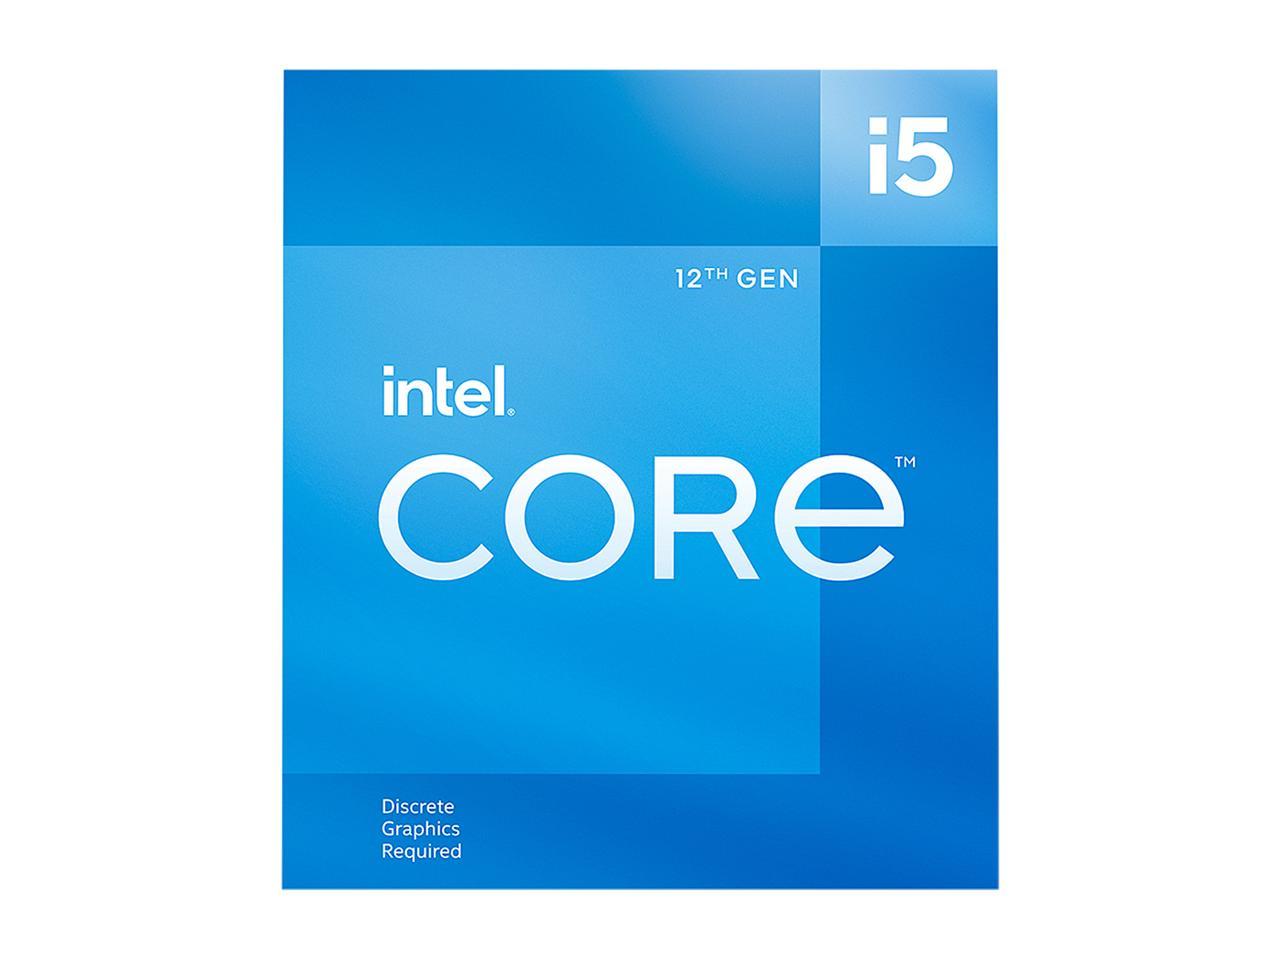 ntel Core i5-12400F - Core i5 12th Gen Alder Lake 6-Core 2.5 GHz LGA 1700 65W Desktop Processor $179.99